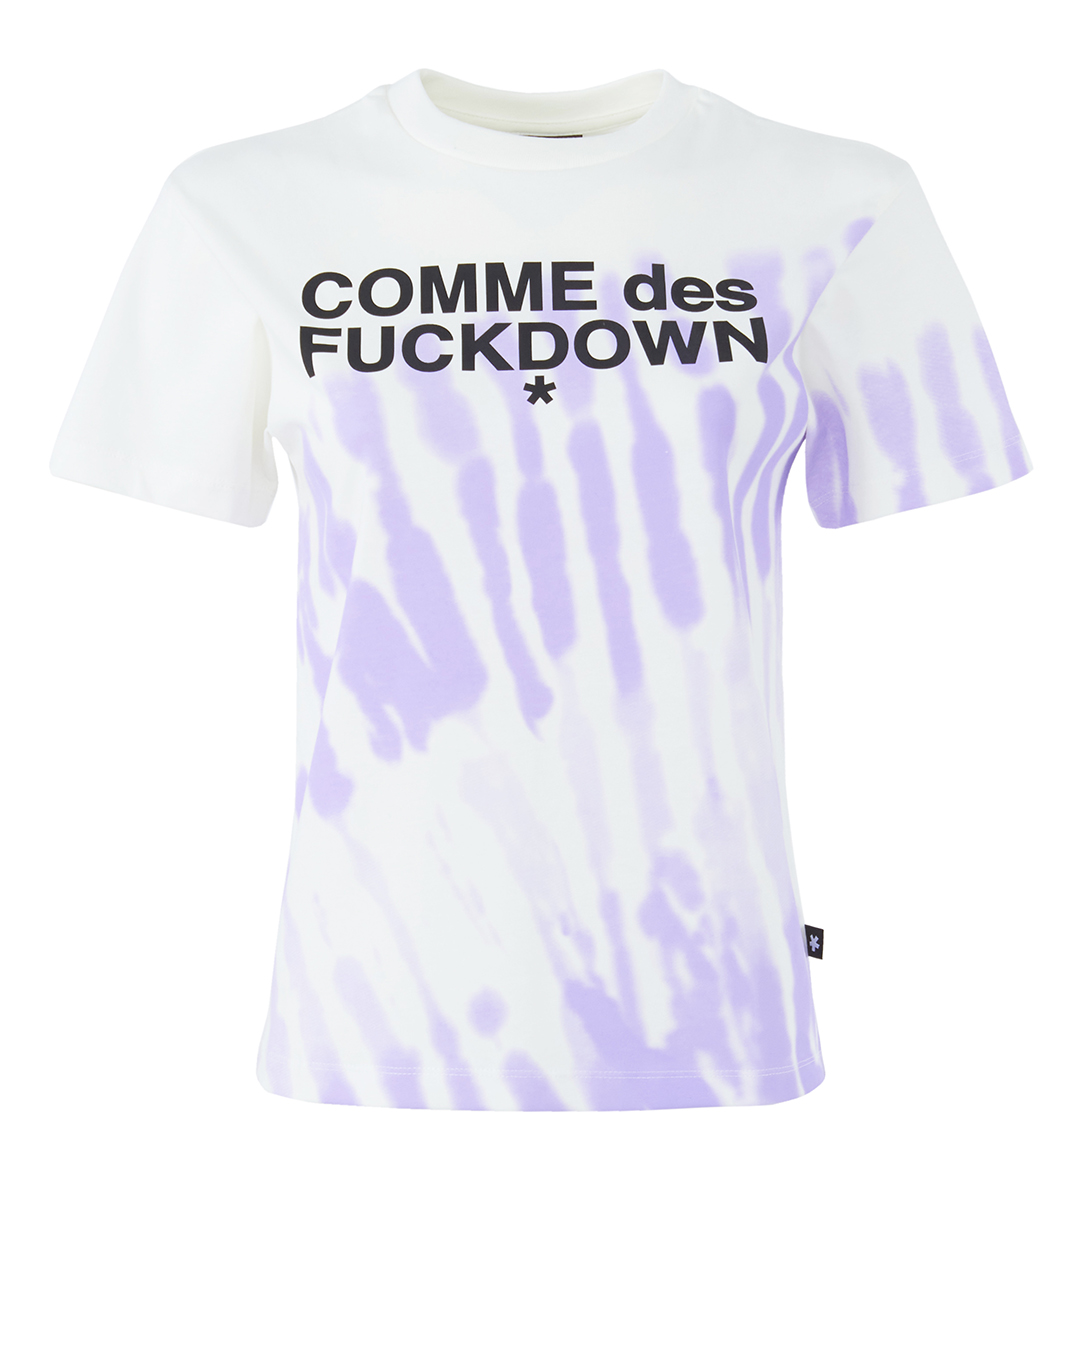 хлопковая футболка COMME des FUCKDOWN хлопковая футболка dom rebel